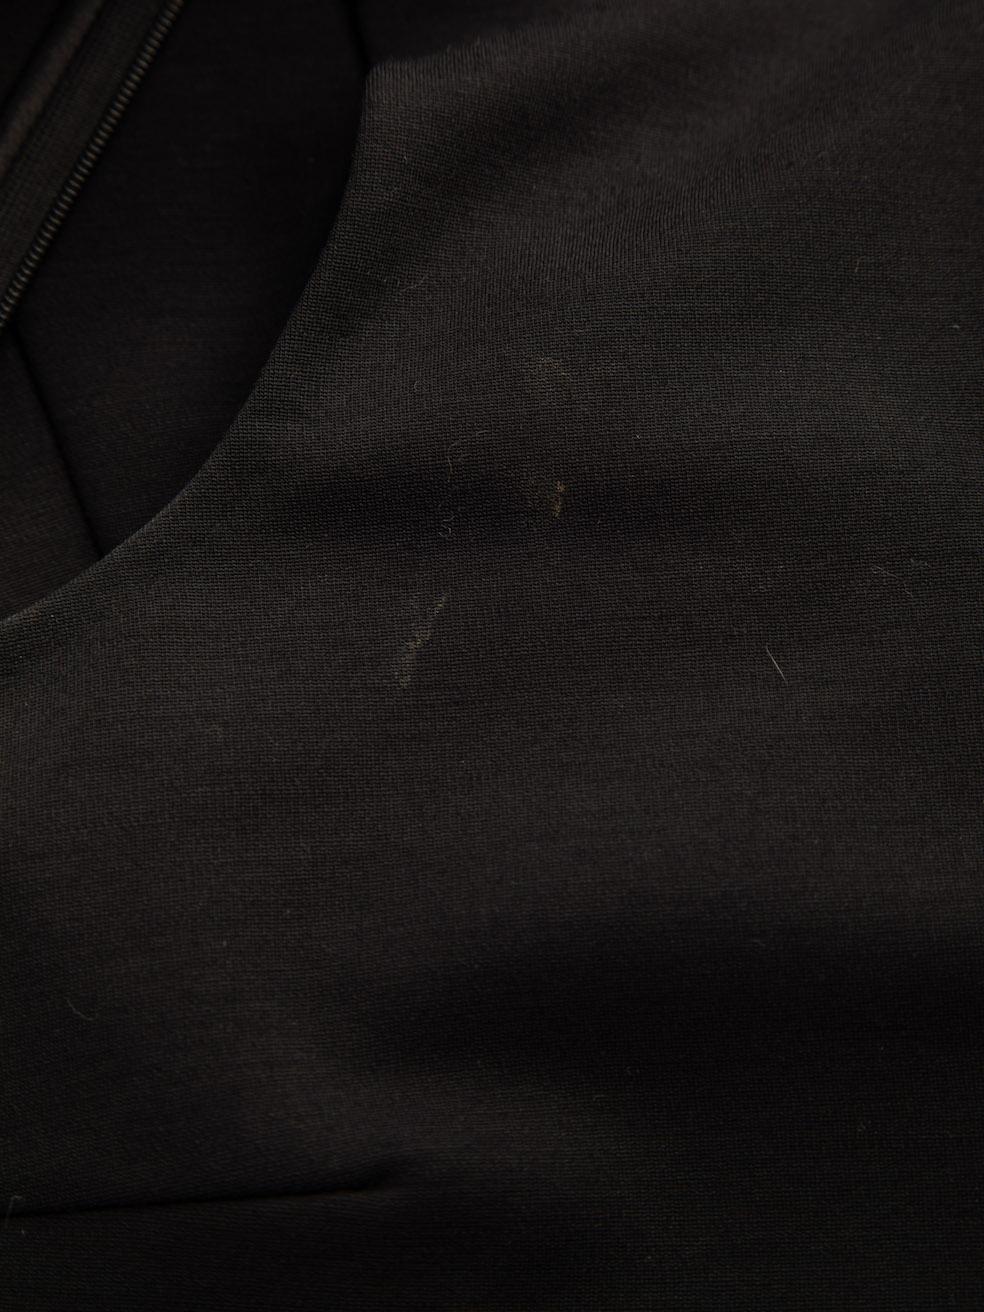 Yves Saint Laurent Black Autumn 2010 Wool Sleeveless Shift Midi Dress Size M For Sale 1